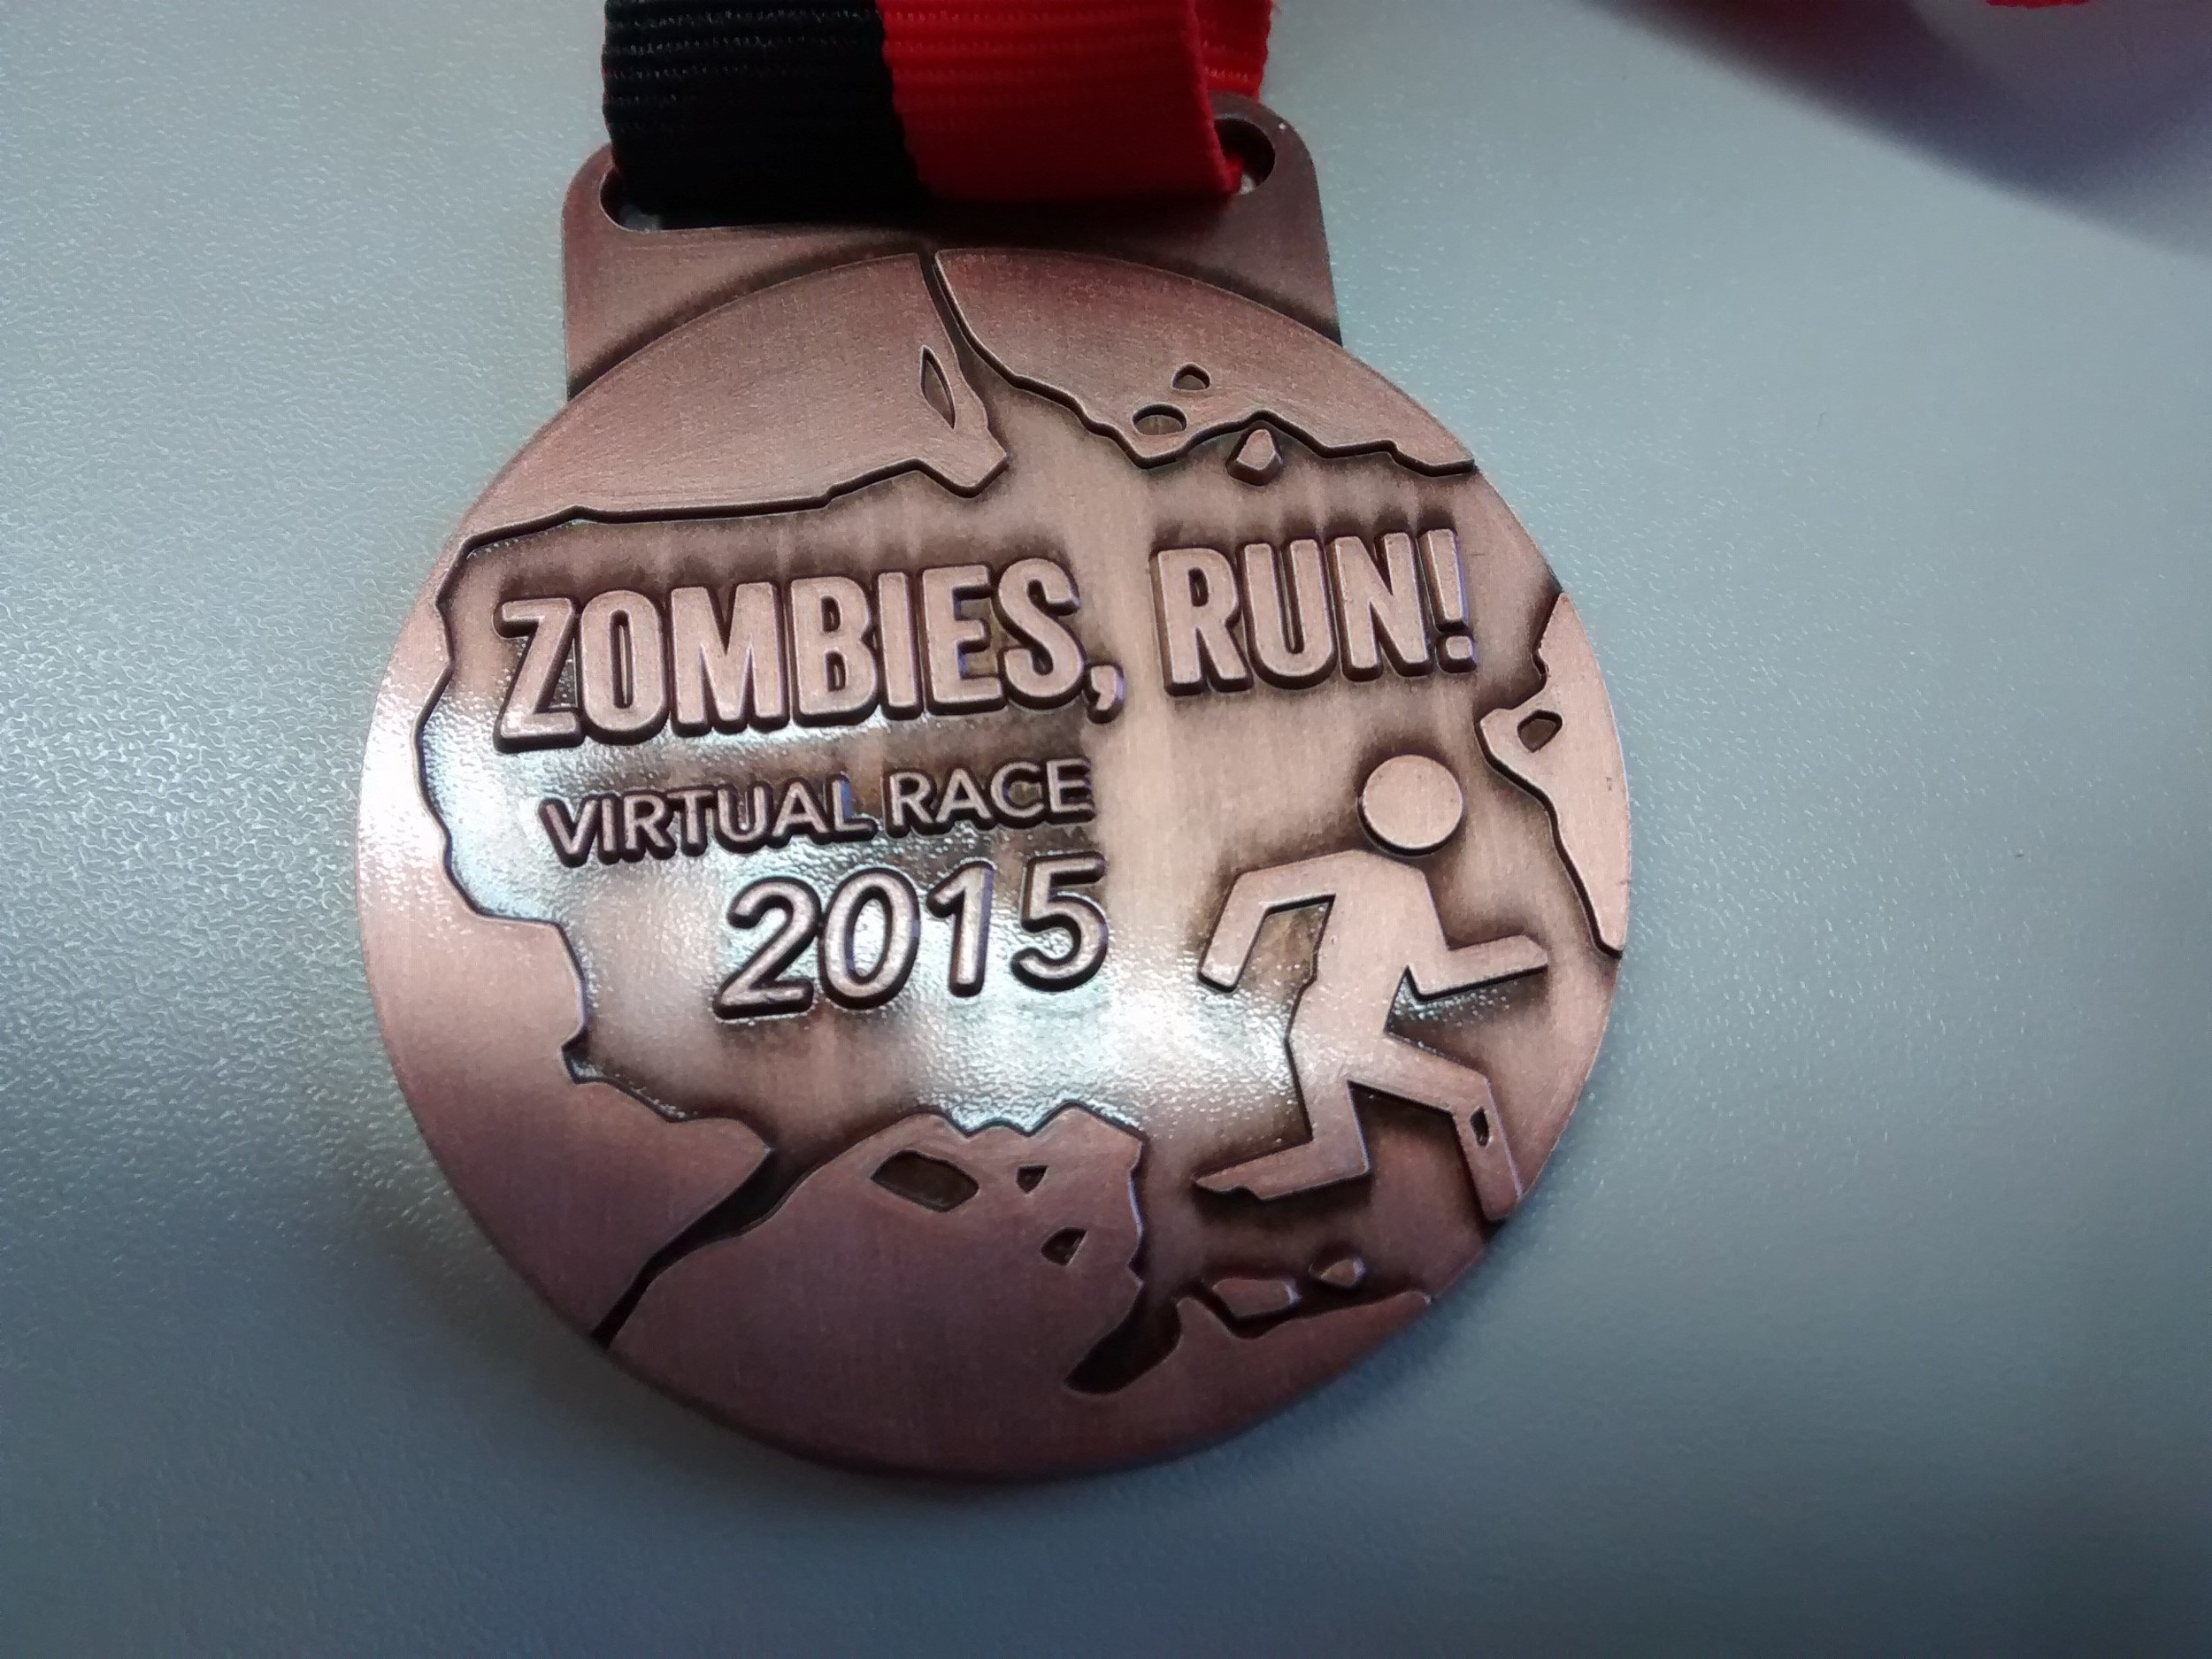 Zombies, Run Virtual Race